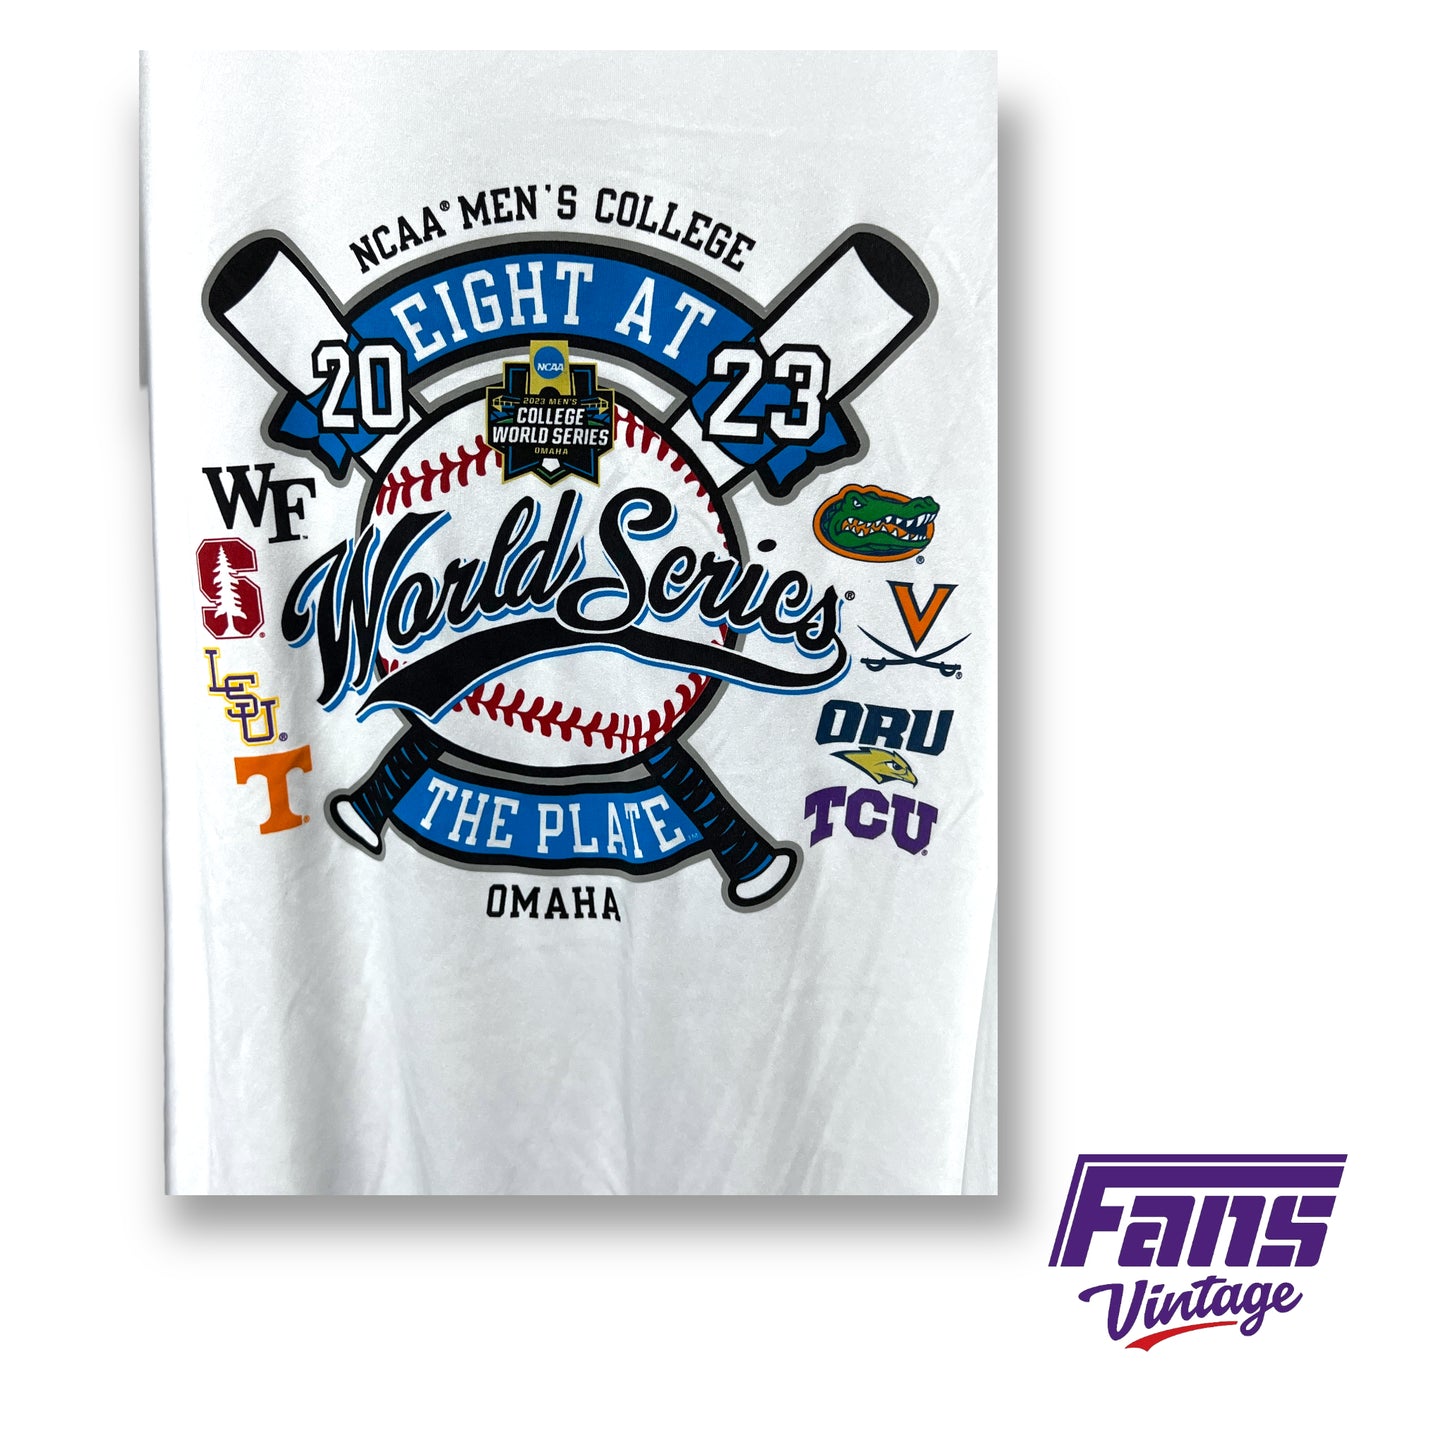 CWS 2023 Limited Edition Tournament Tee! TCU Baseball College World Series Shirt